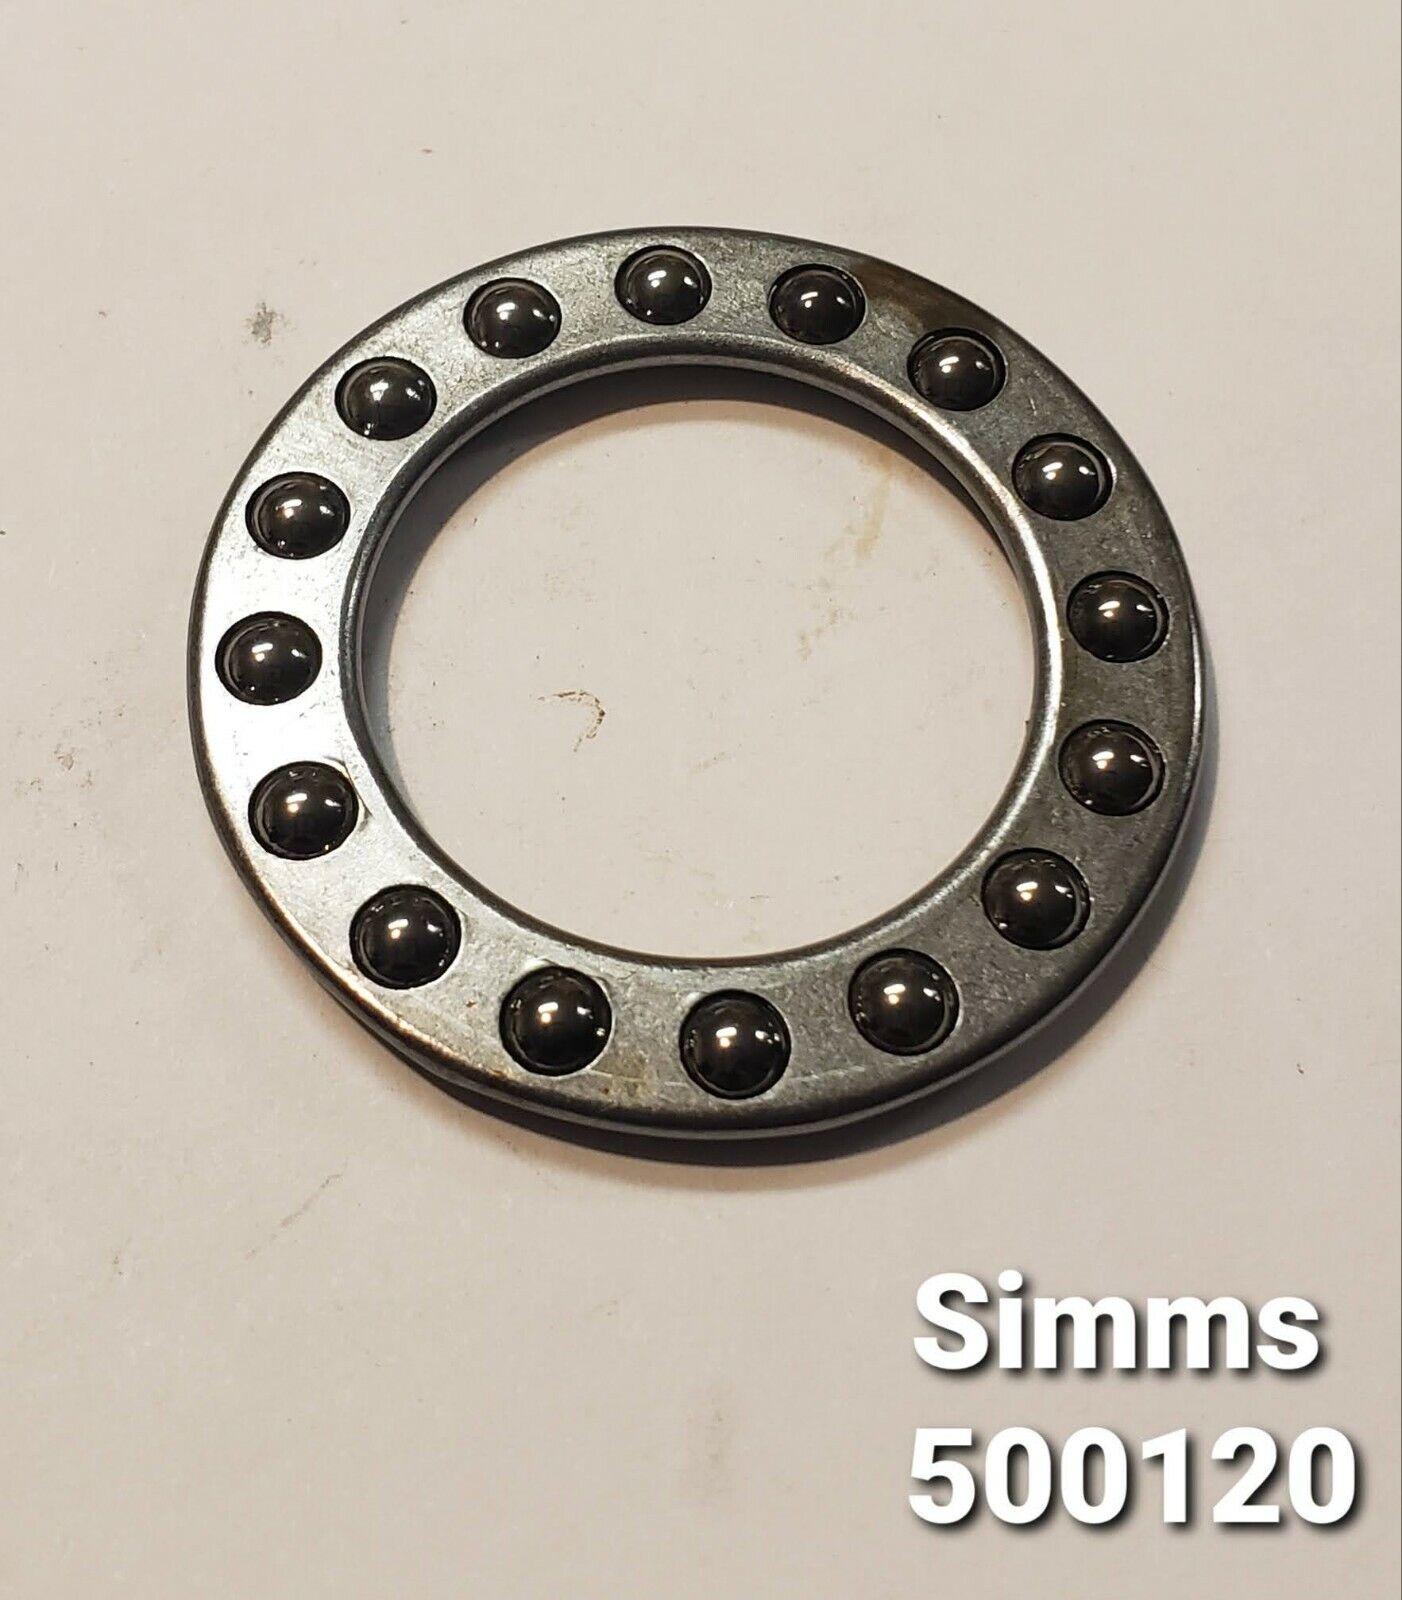 Lucas CAV Simms 500120 Thrust Bearing Fitted on Minimec Pump.